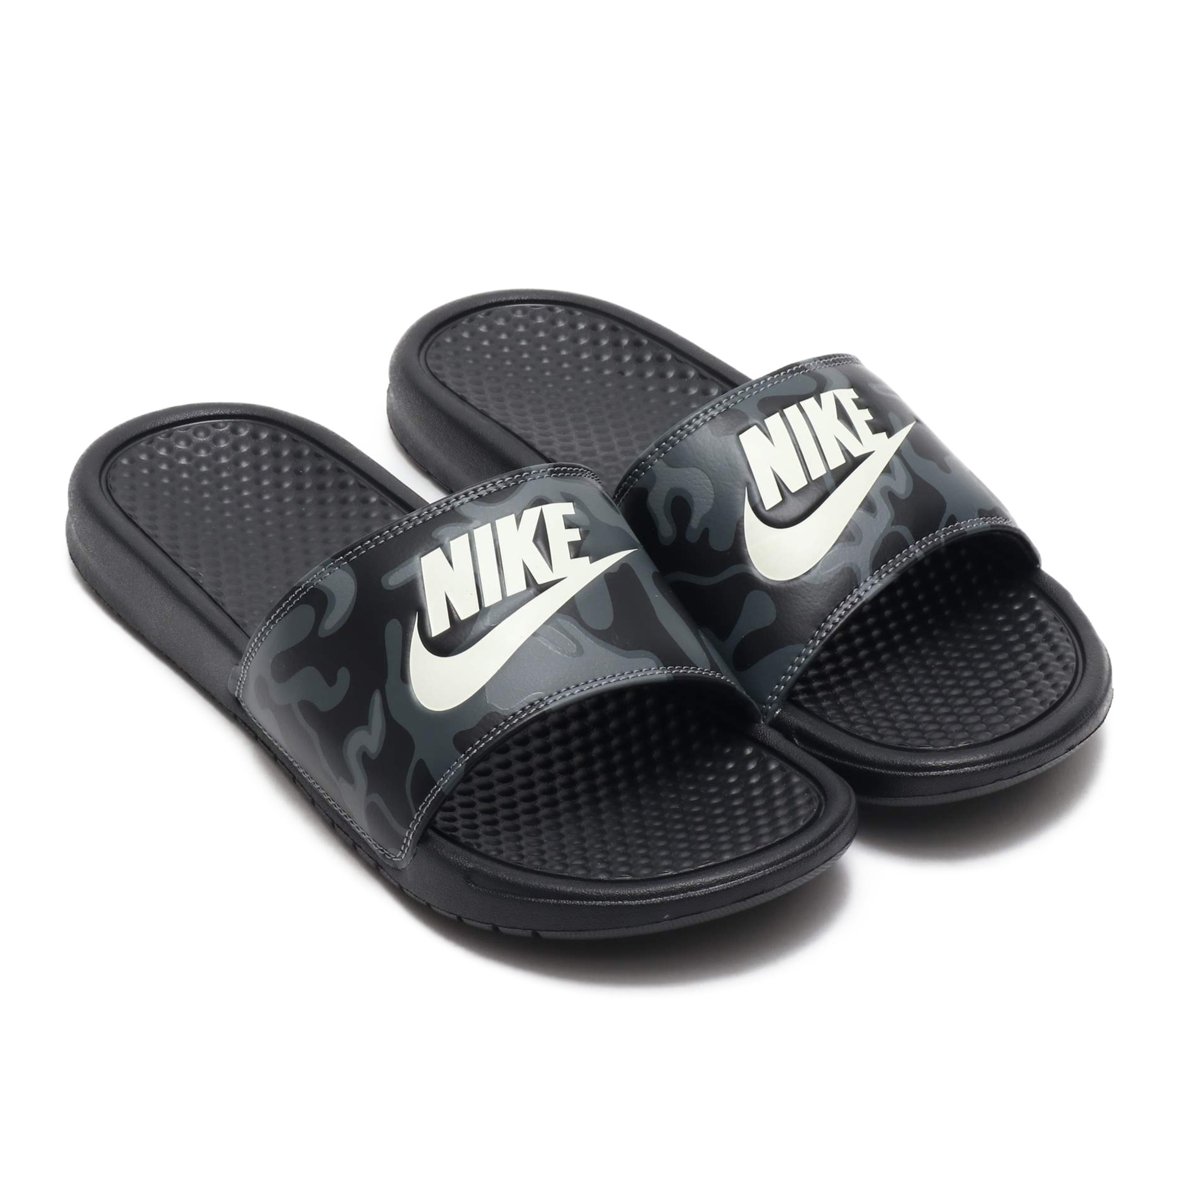 gallon januari Uitmaken Sneaker Shouts™ on Twitter: "STEAL: Nike Benassi JDI Slides "Black Camo"  only $15.99 + free shipping (40% OFF) BUY HERE: https://t.co/zHfPl6gsuC  https://t.co/FDjA6zFcdg" / Twitter